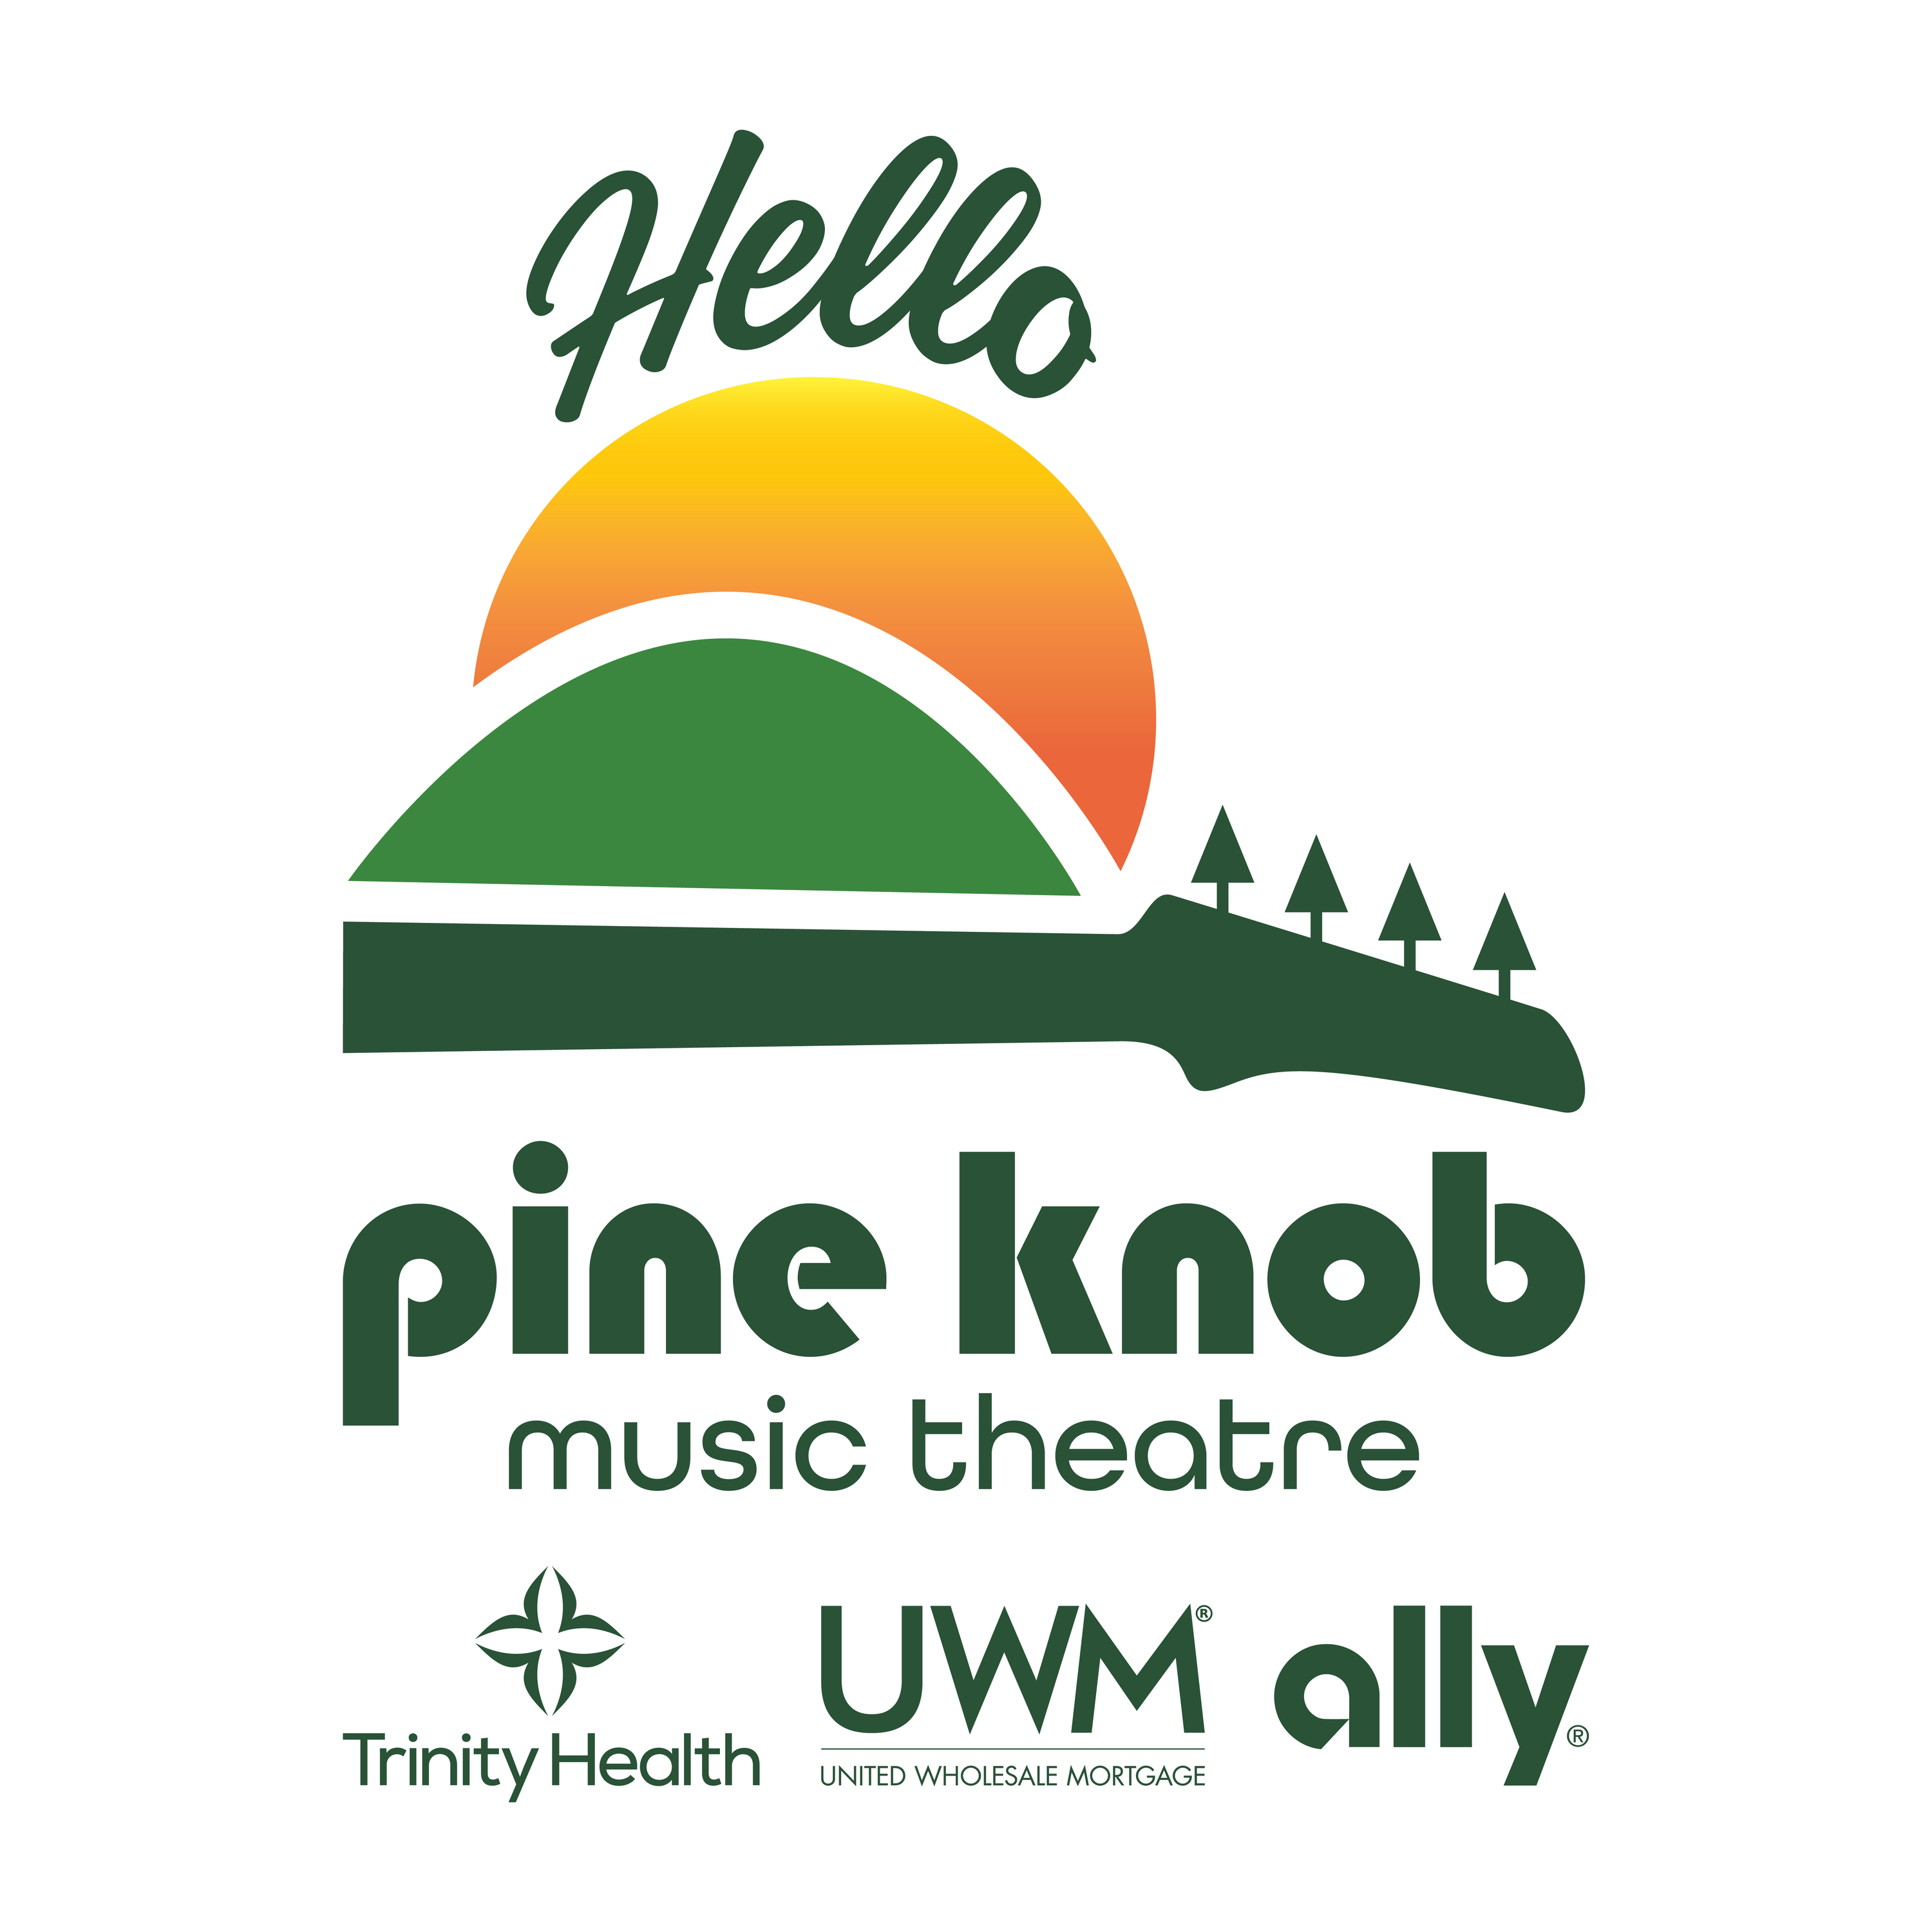  Hello, Pine Knob